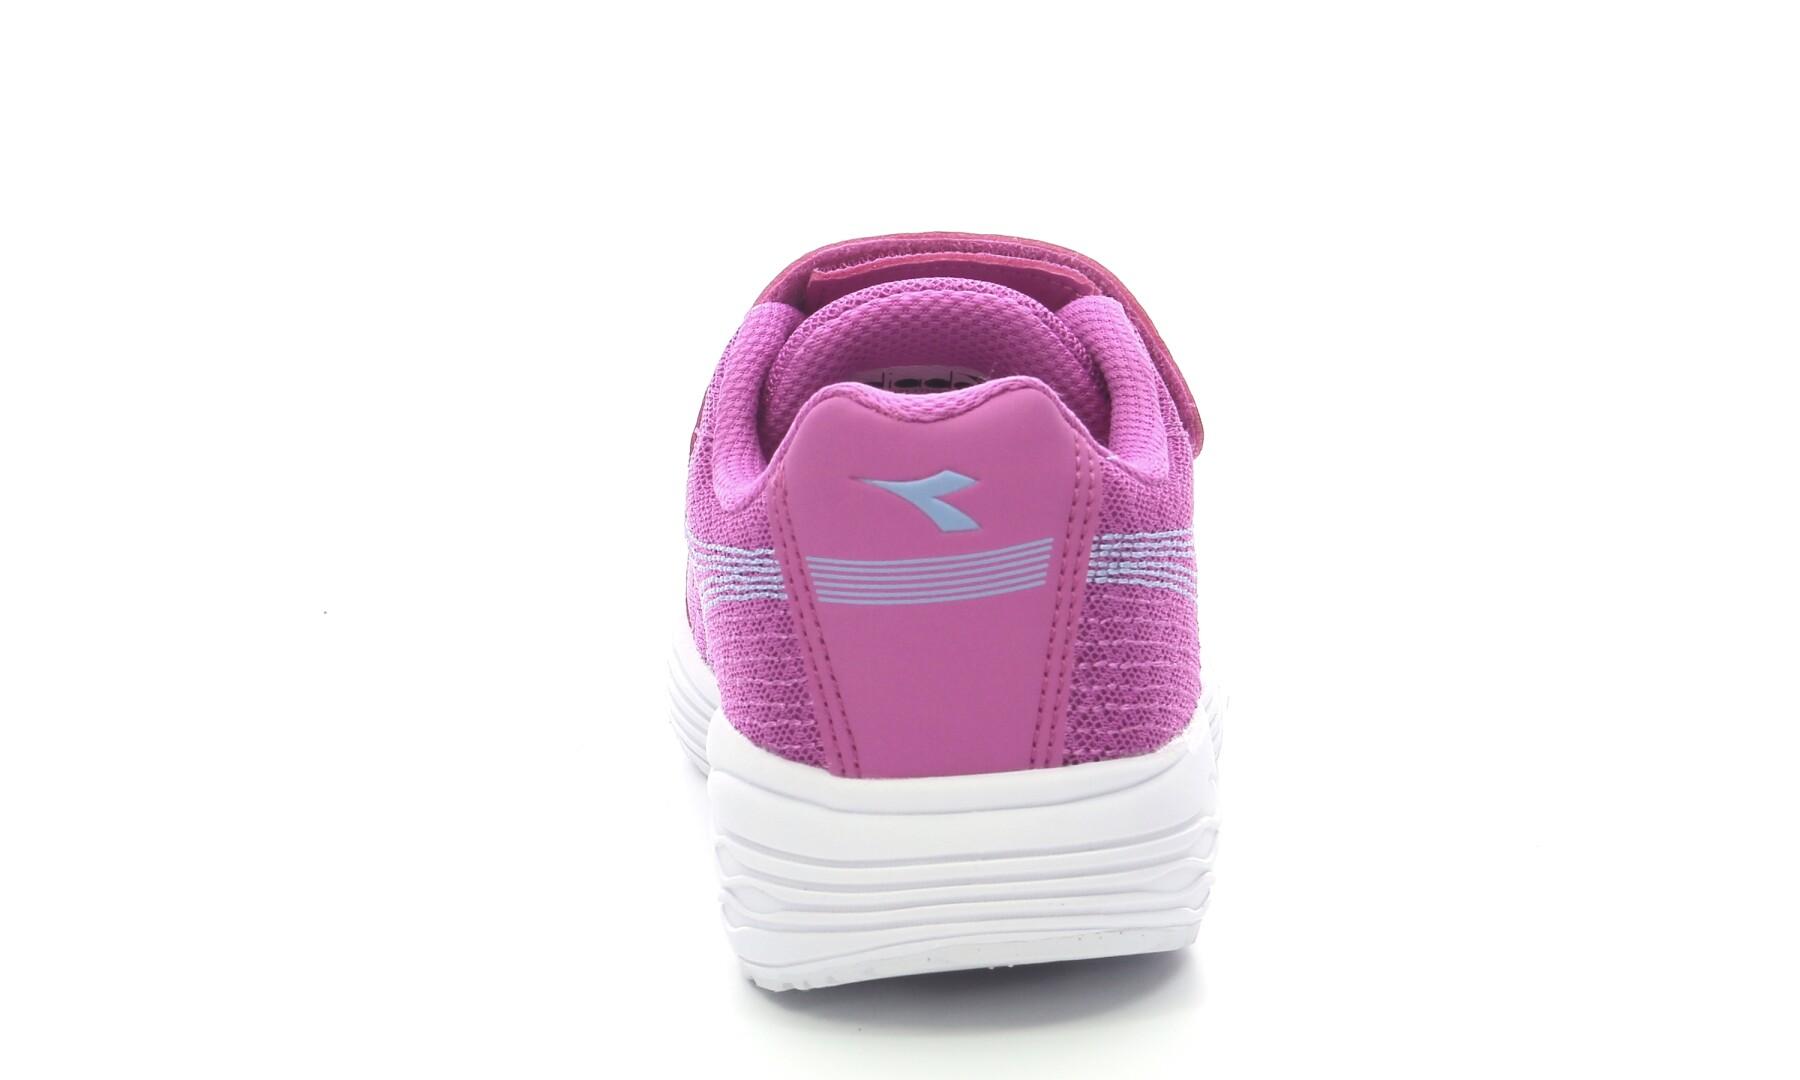 Chaussures de running enfant Diadora Flamingo 5